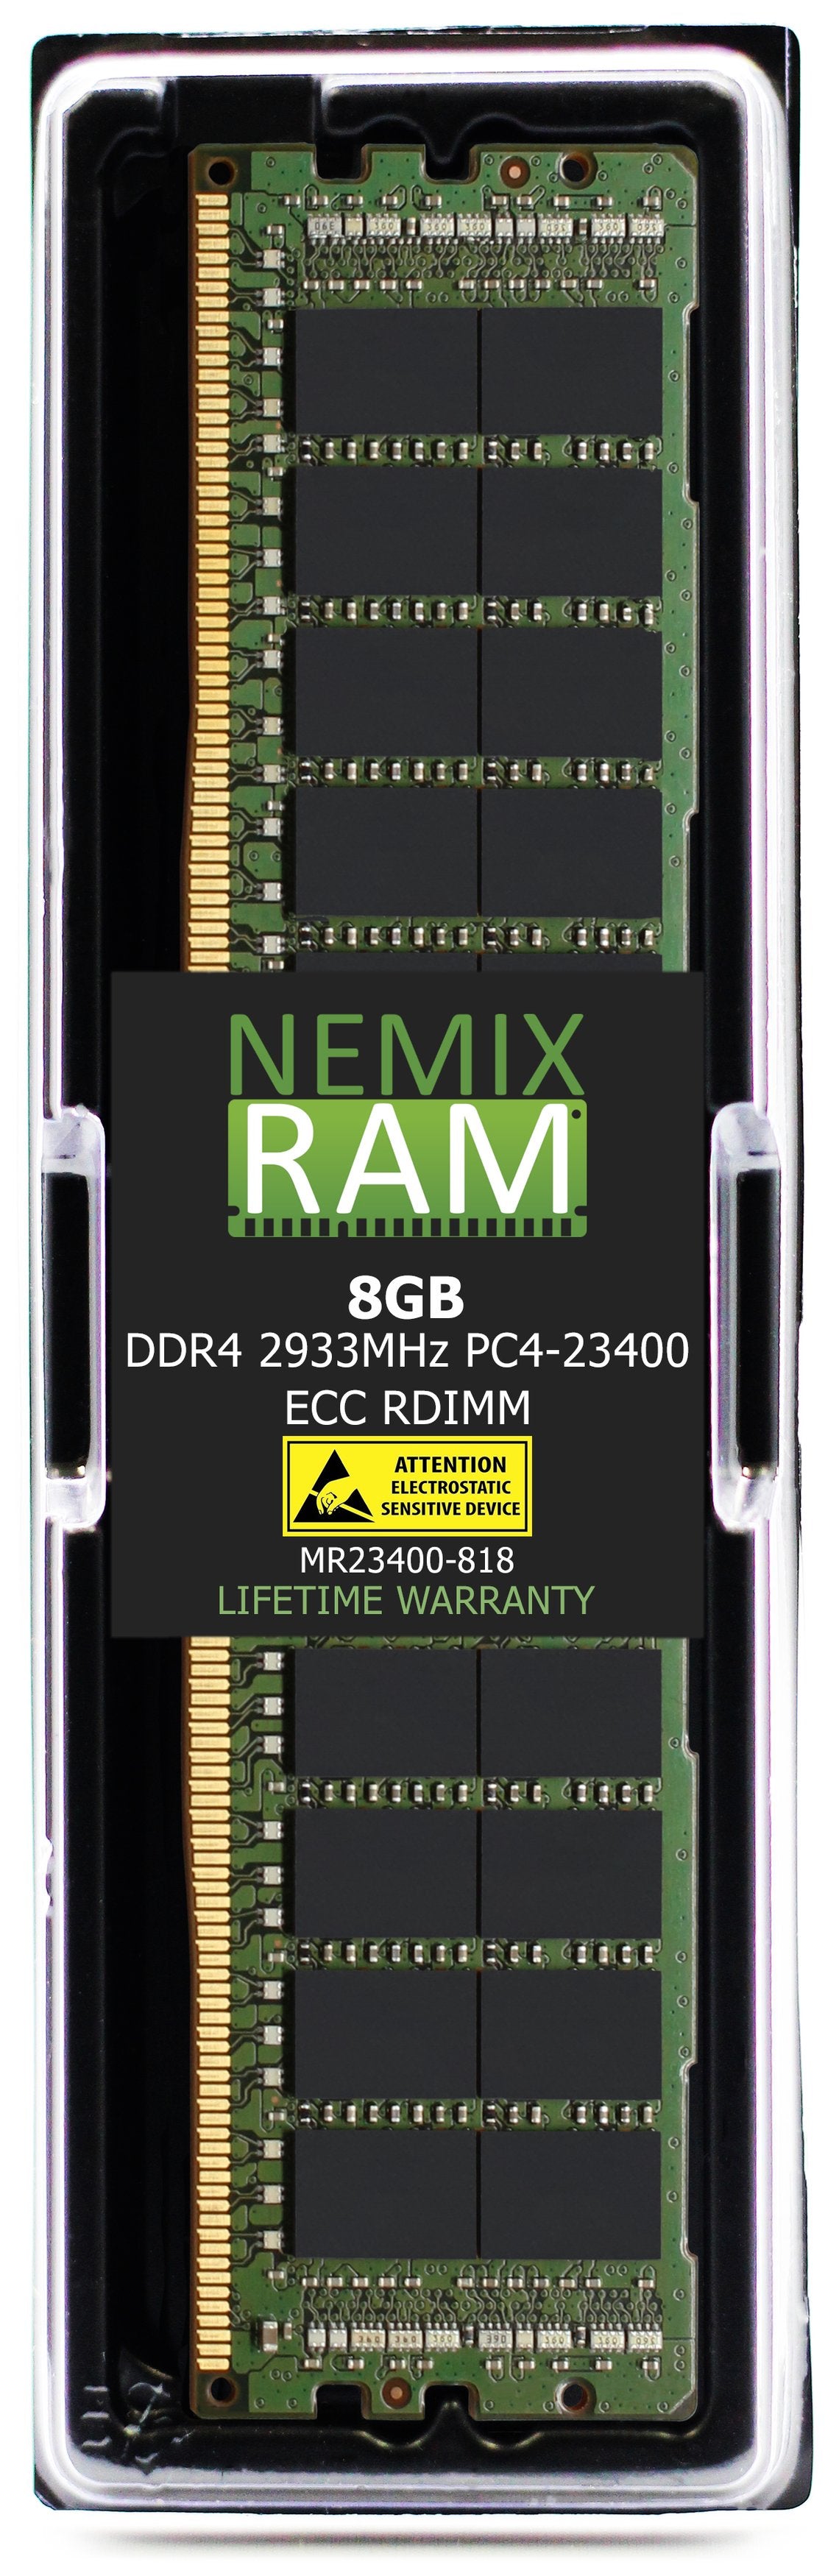 DELL PowerEdge R640 Memory Upgrade